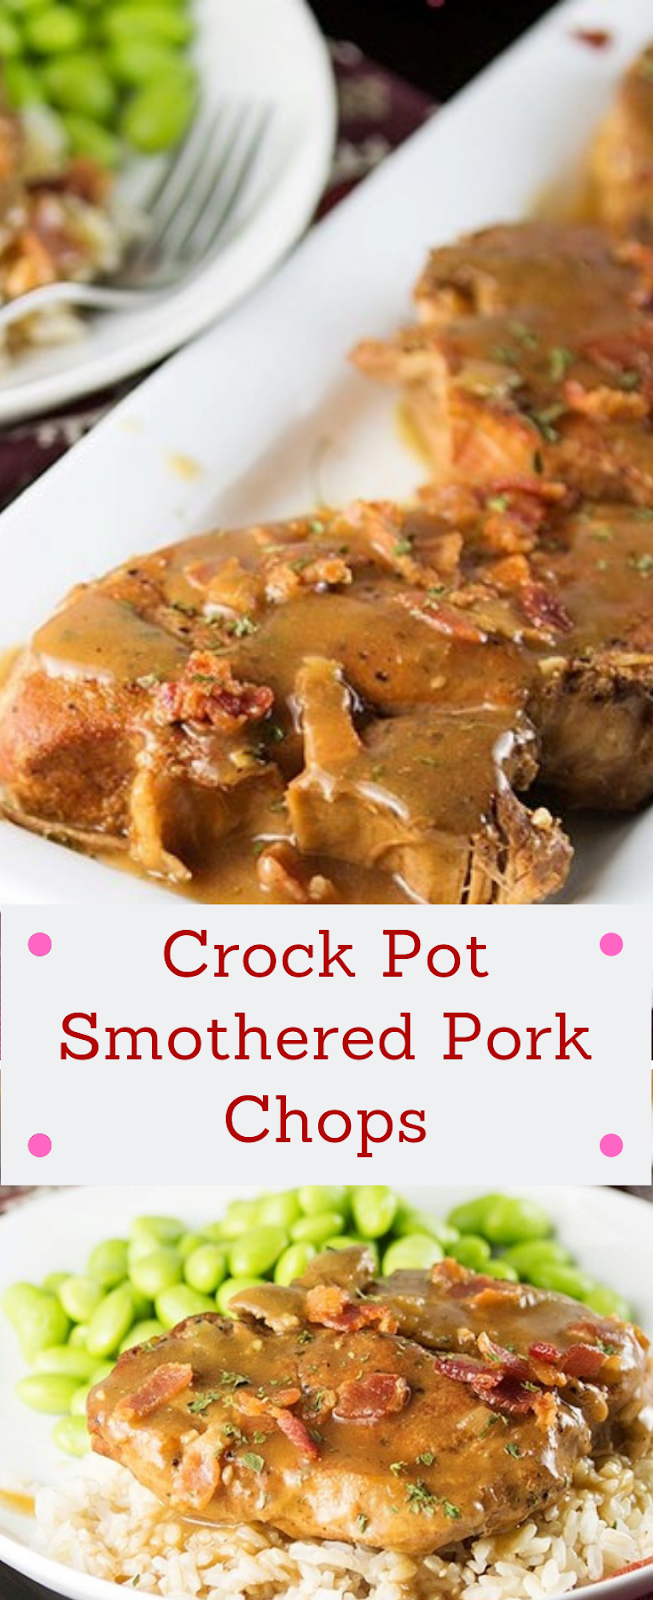 Crock Pot Smothered Pork Chops | EASY RECIPES